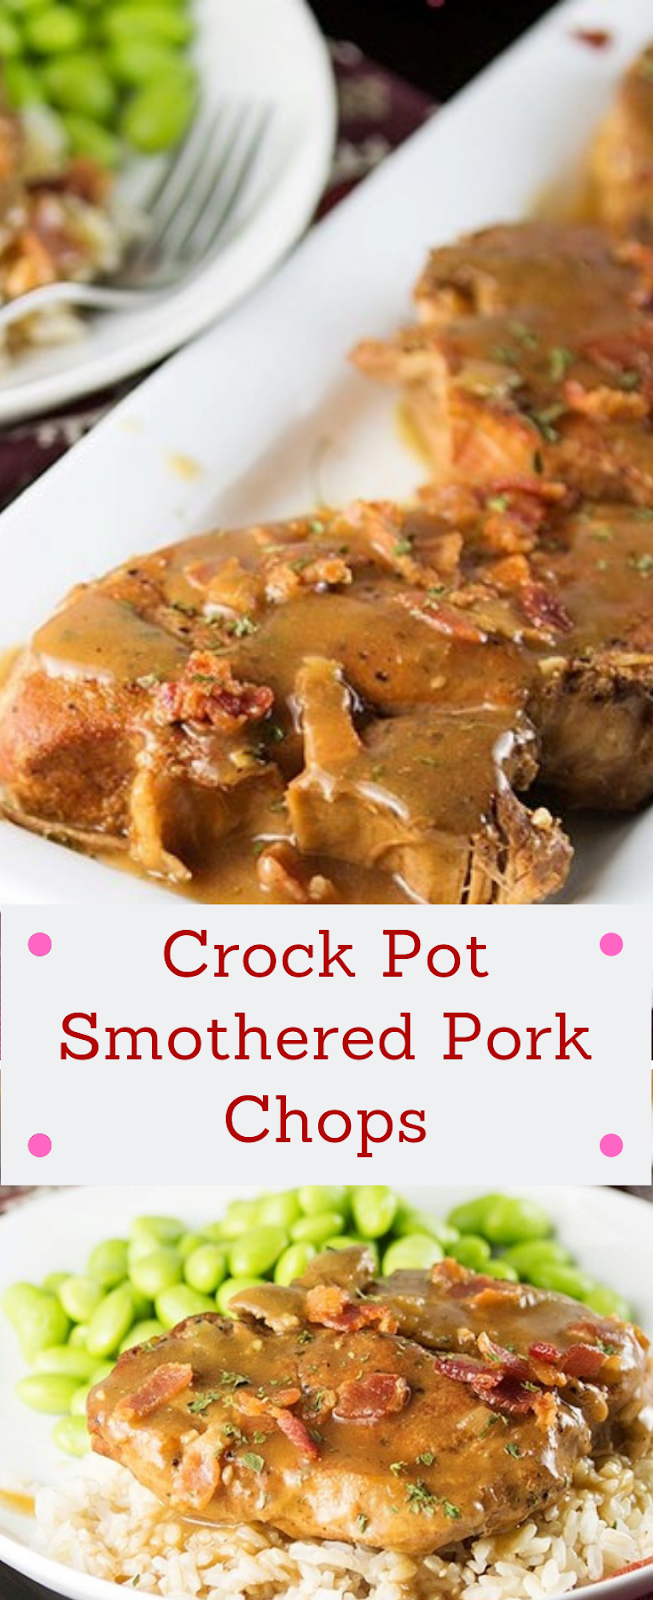 Crock Pot Smothered Pork Chops | EASY RECIPES